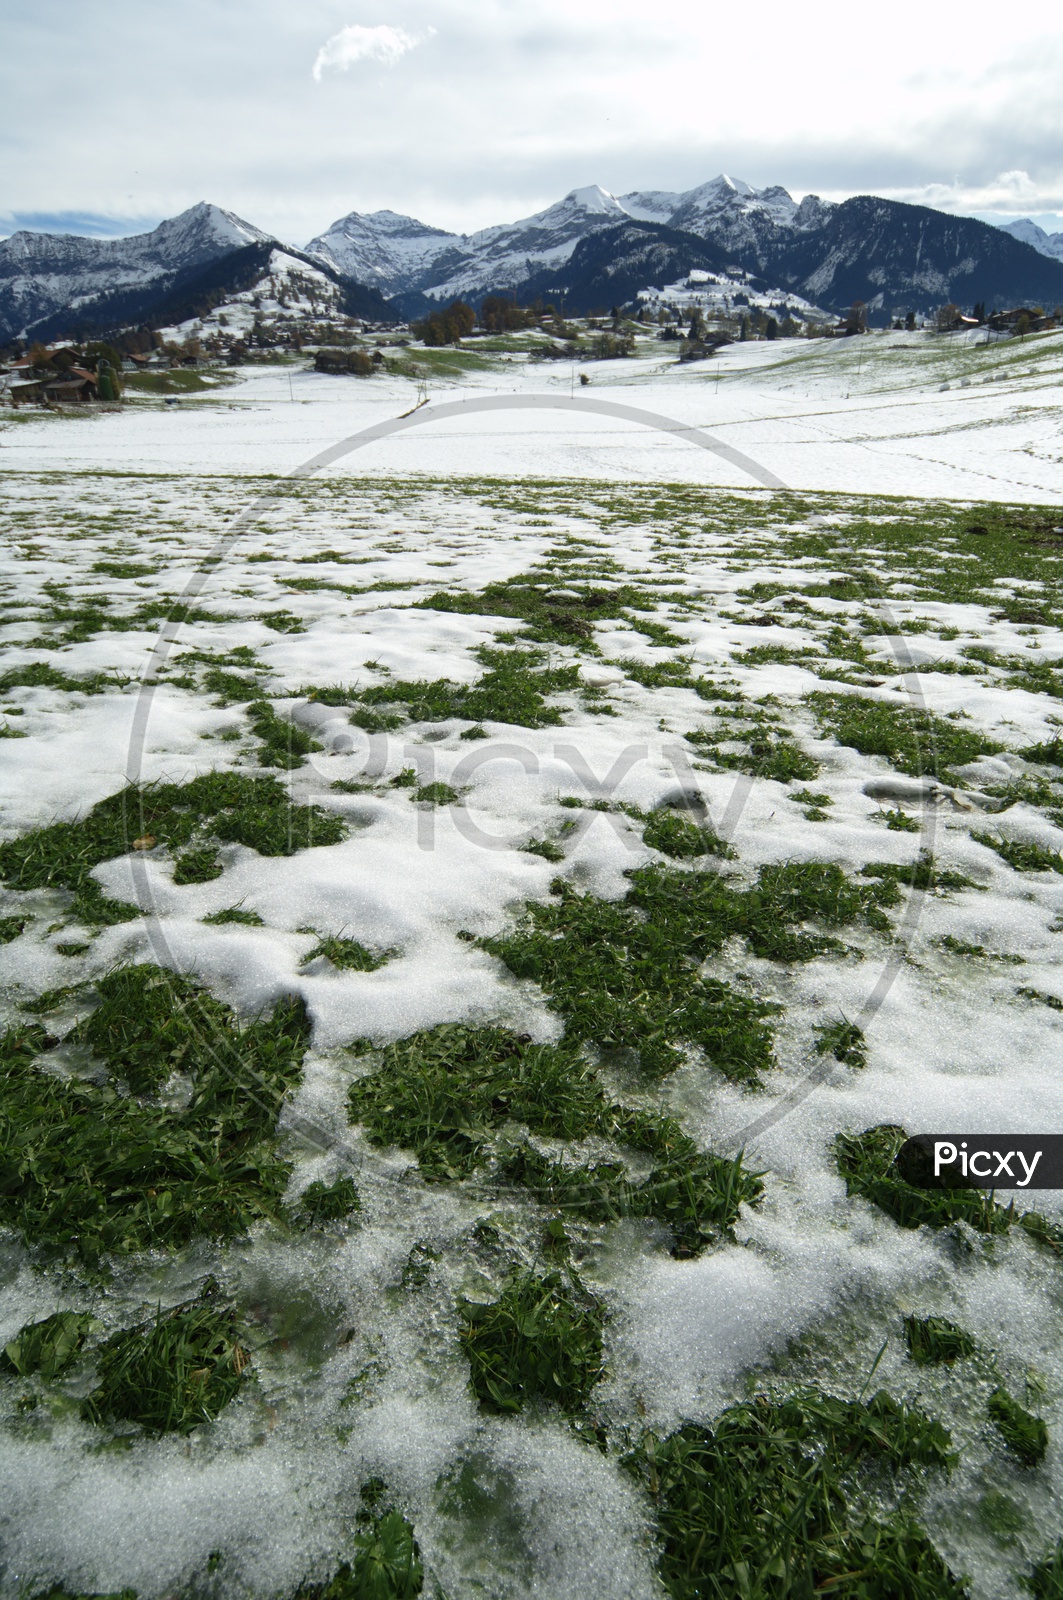 Snow on the grass alongside the Swiss Alps